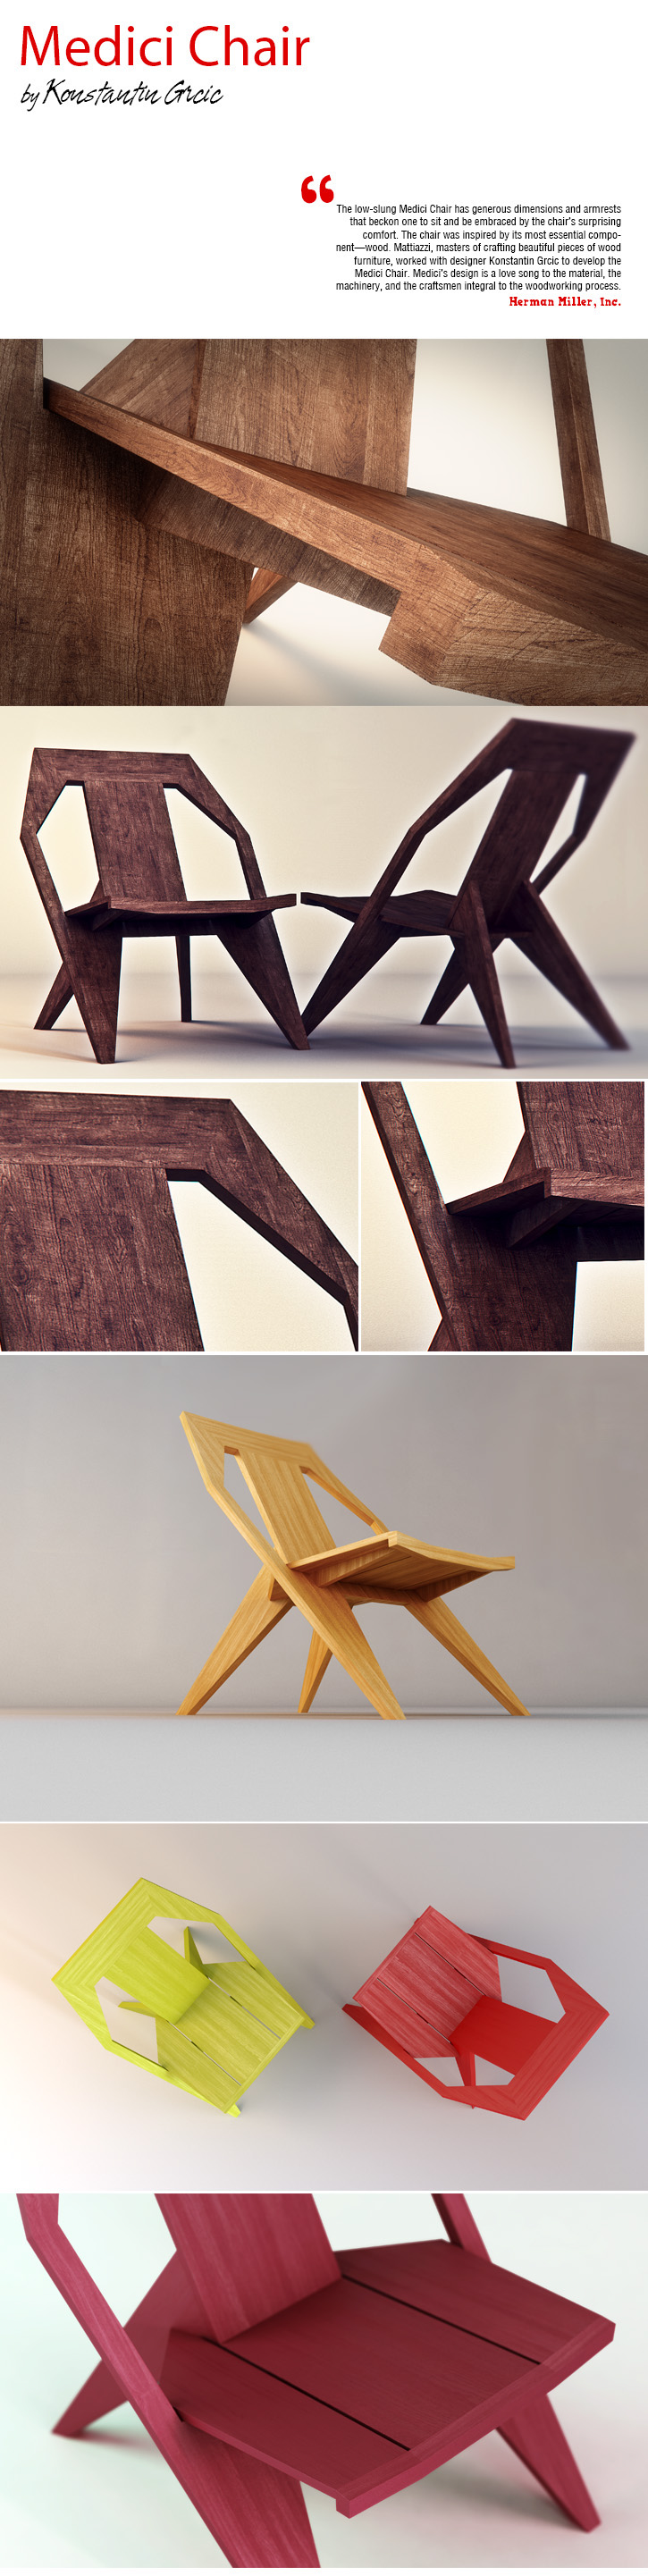 medici chair furniture wood 3D